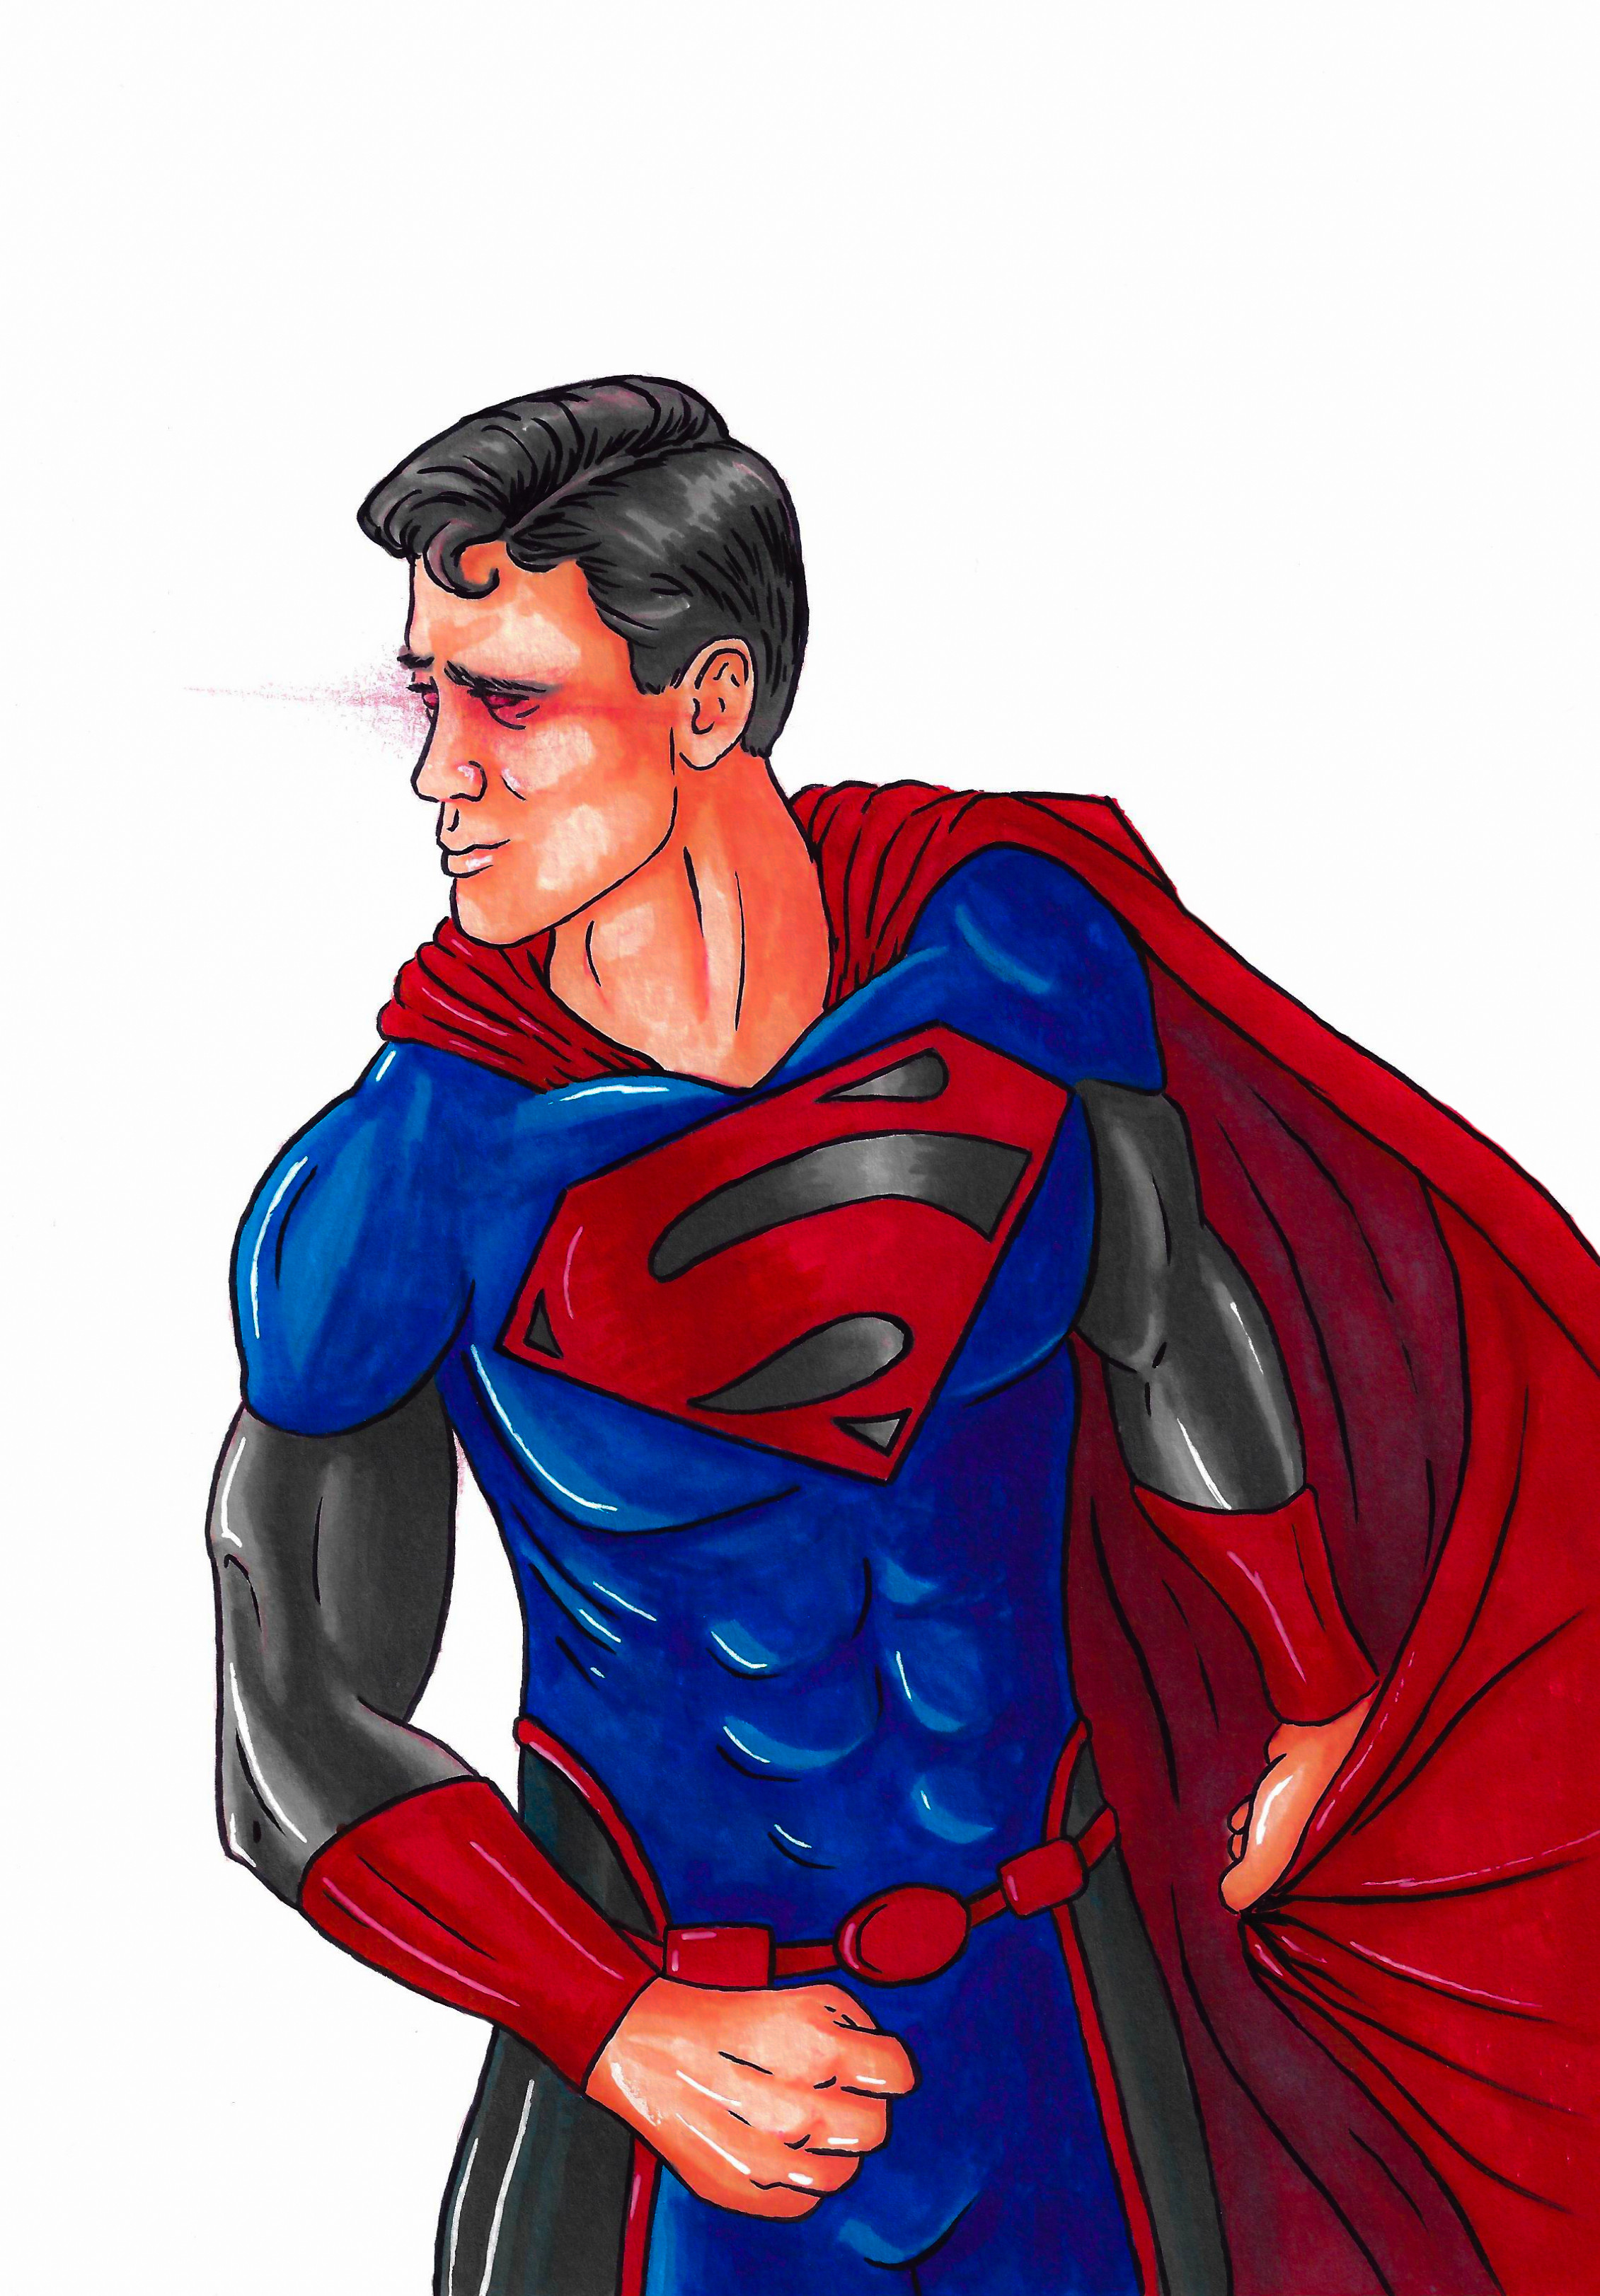 Super Man fan art.
Original costume design